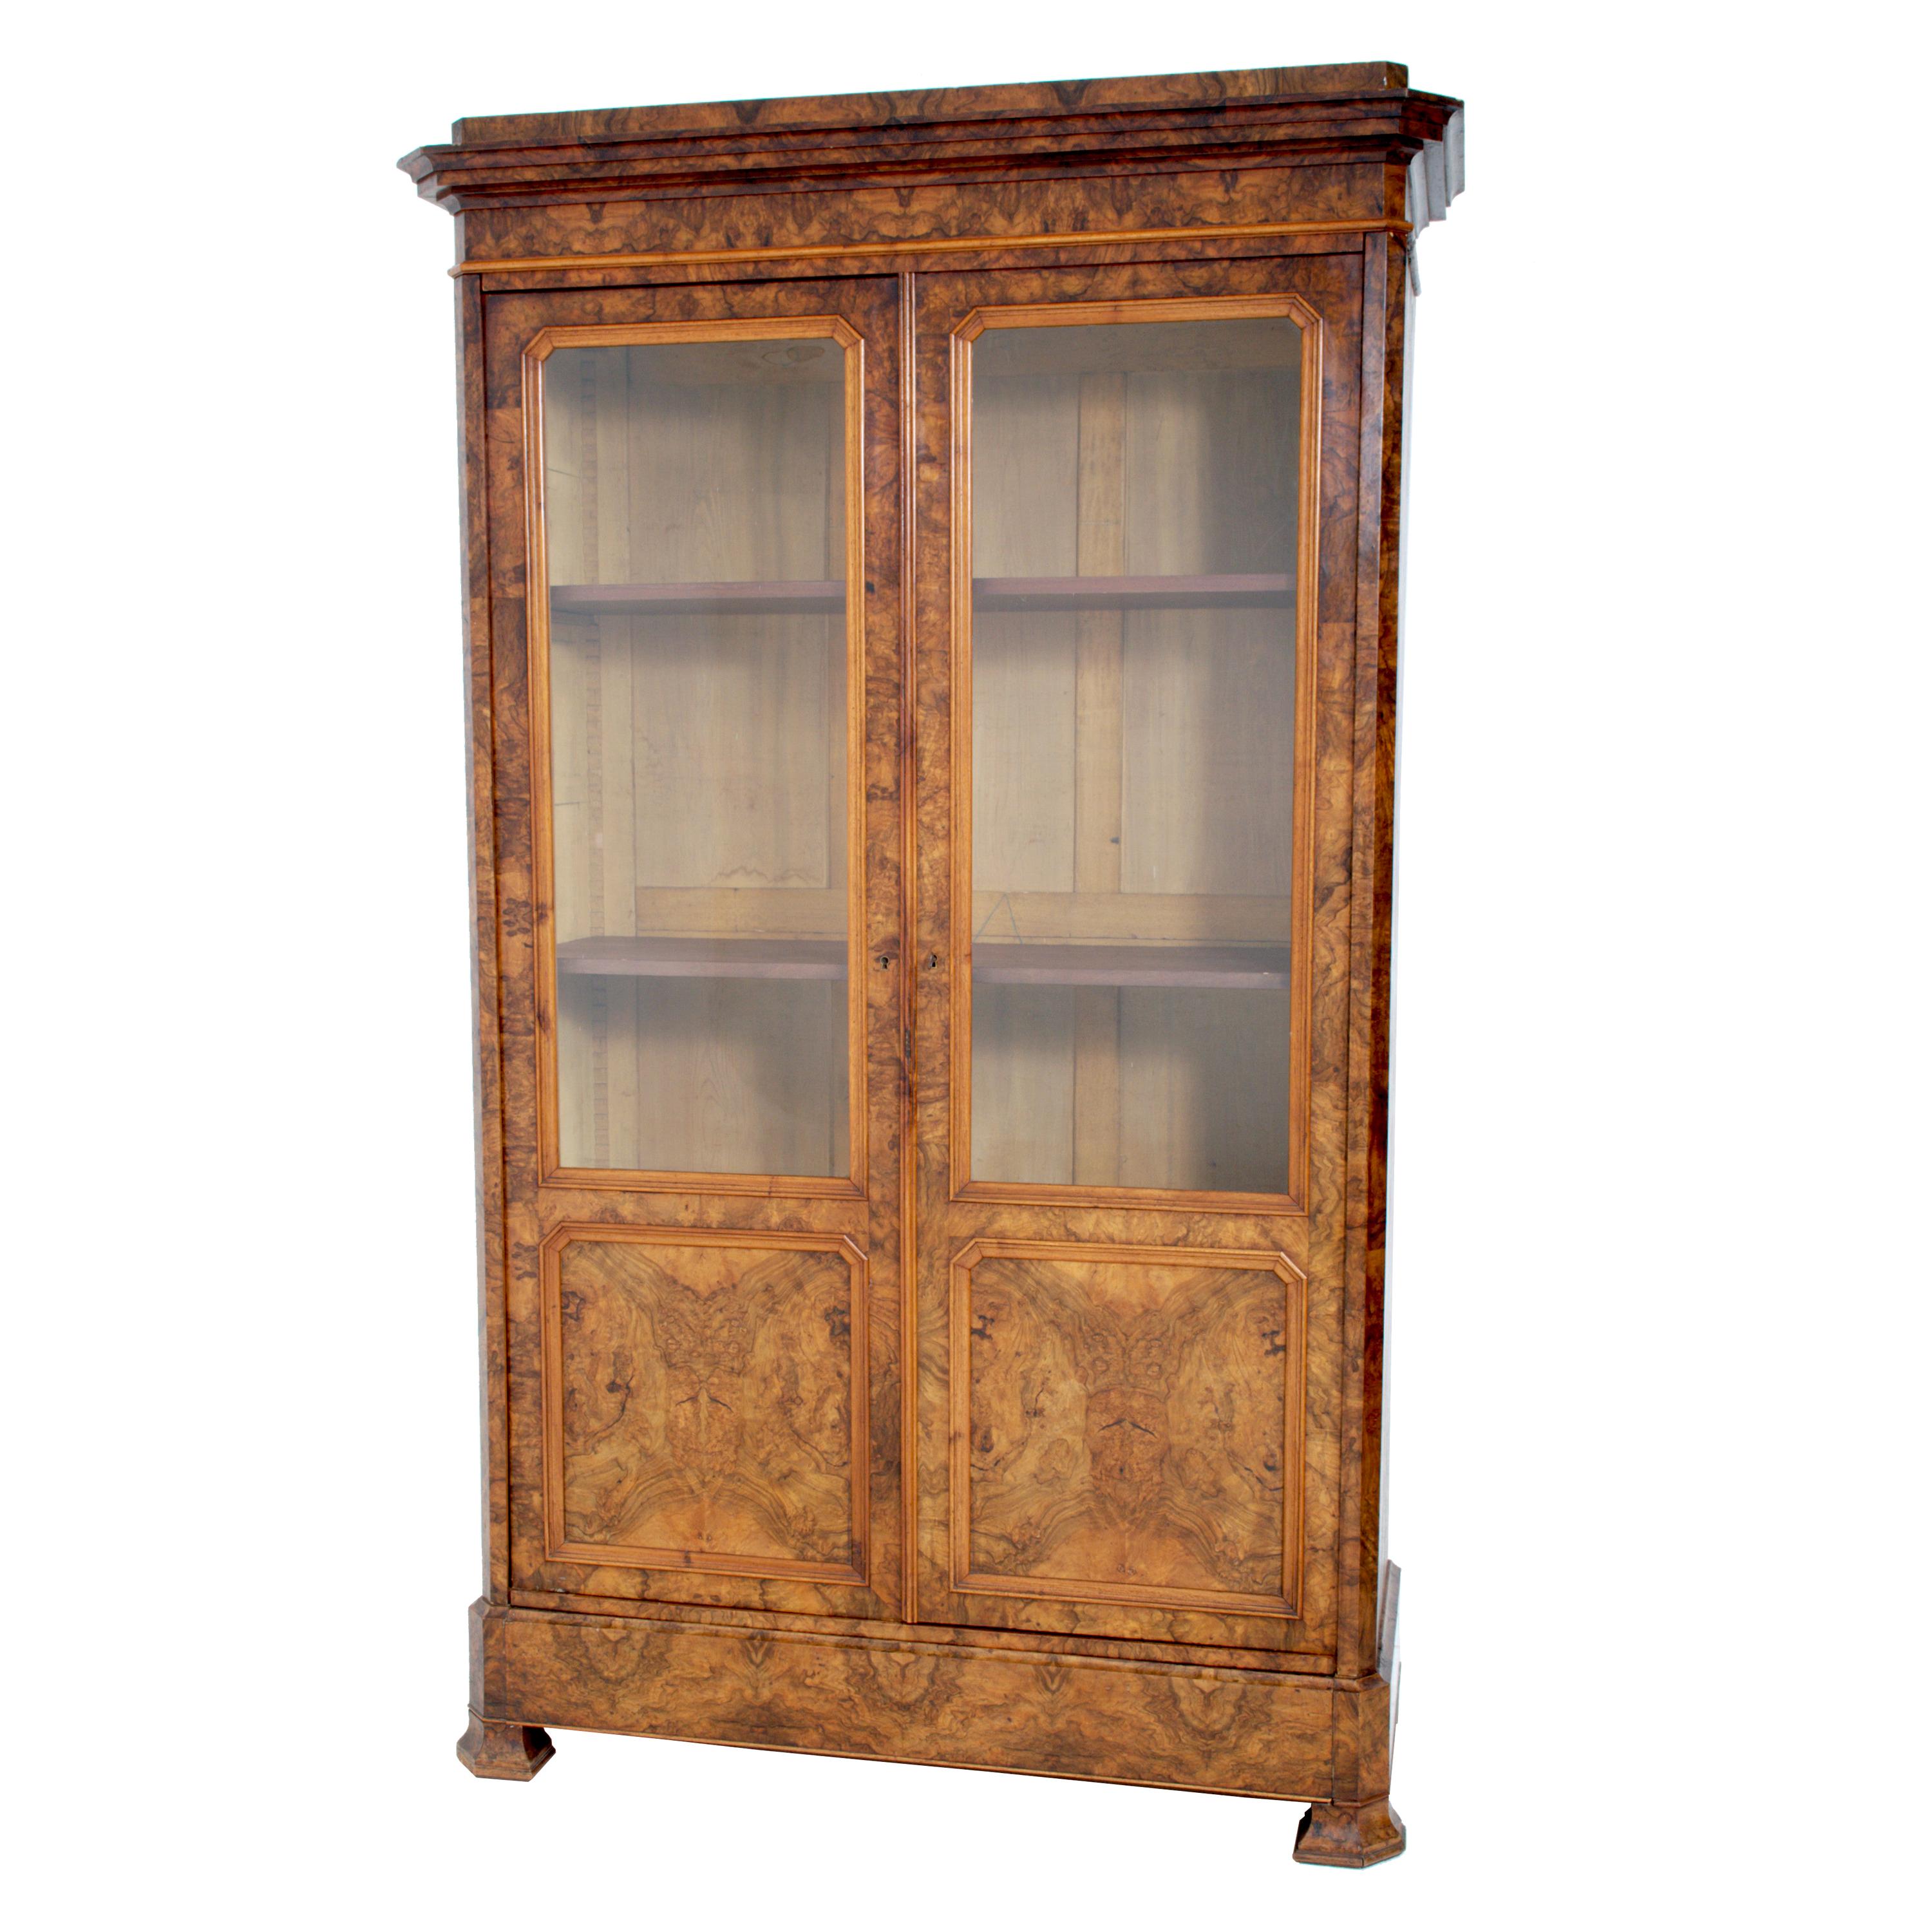 Antique French Louis Philippe Burl Walnut Bookcase / Cabinet, circa 1830